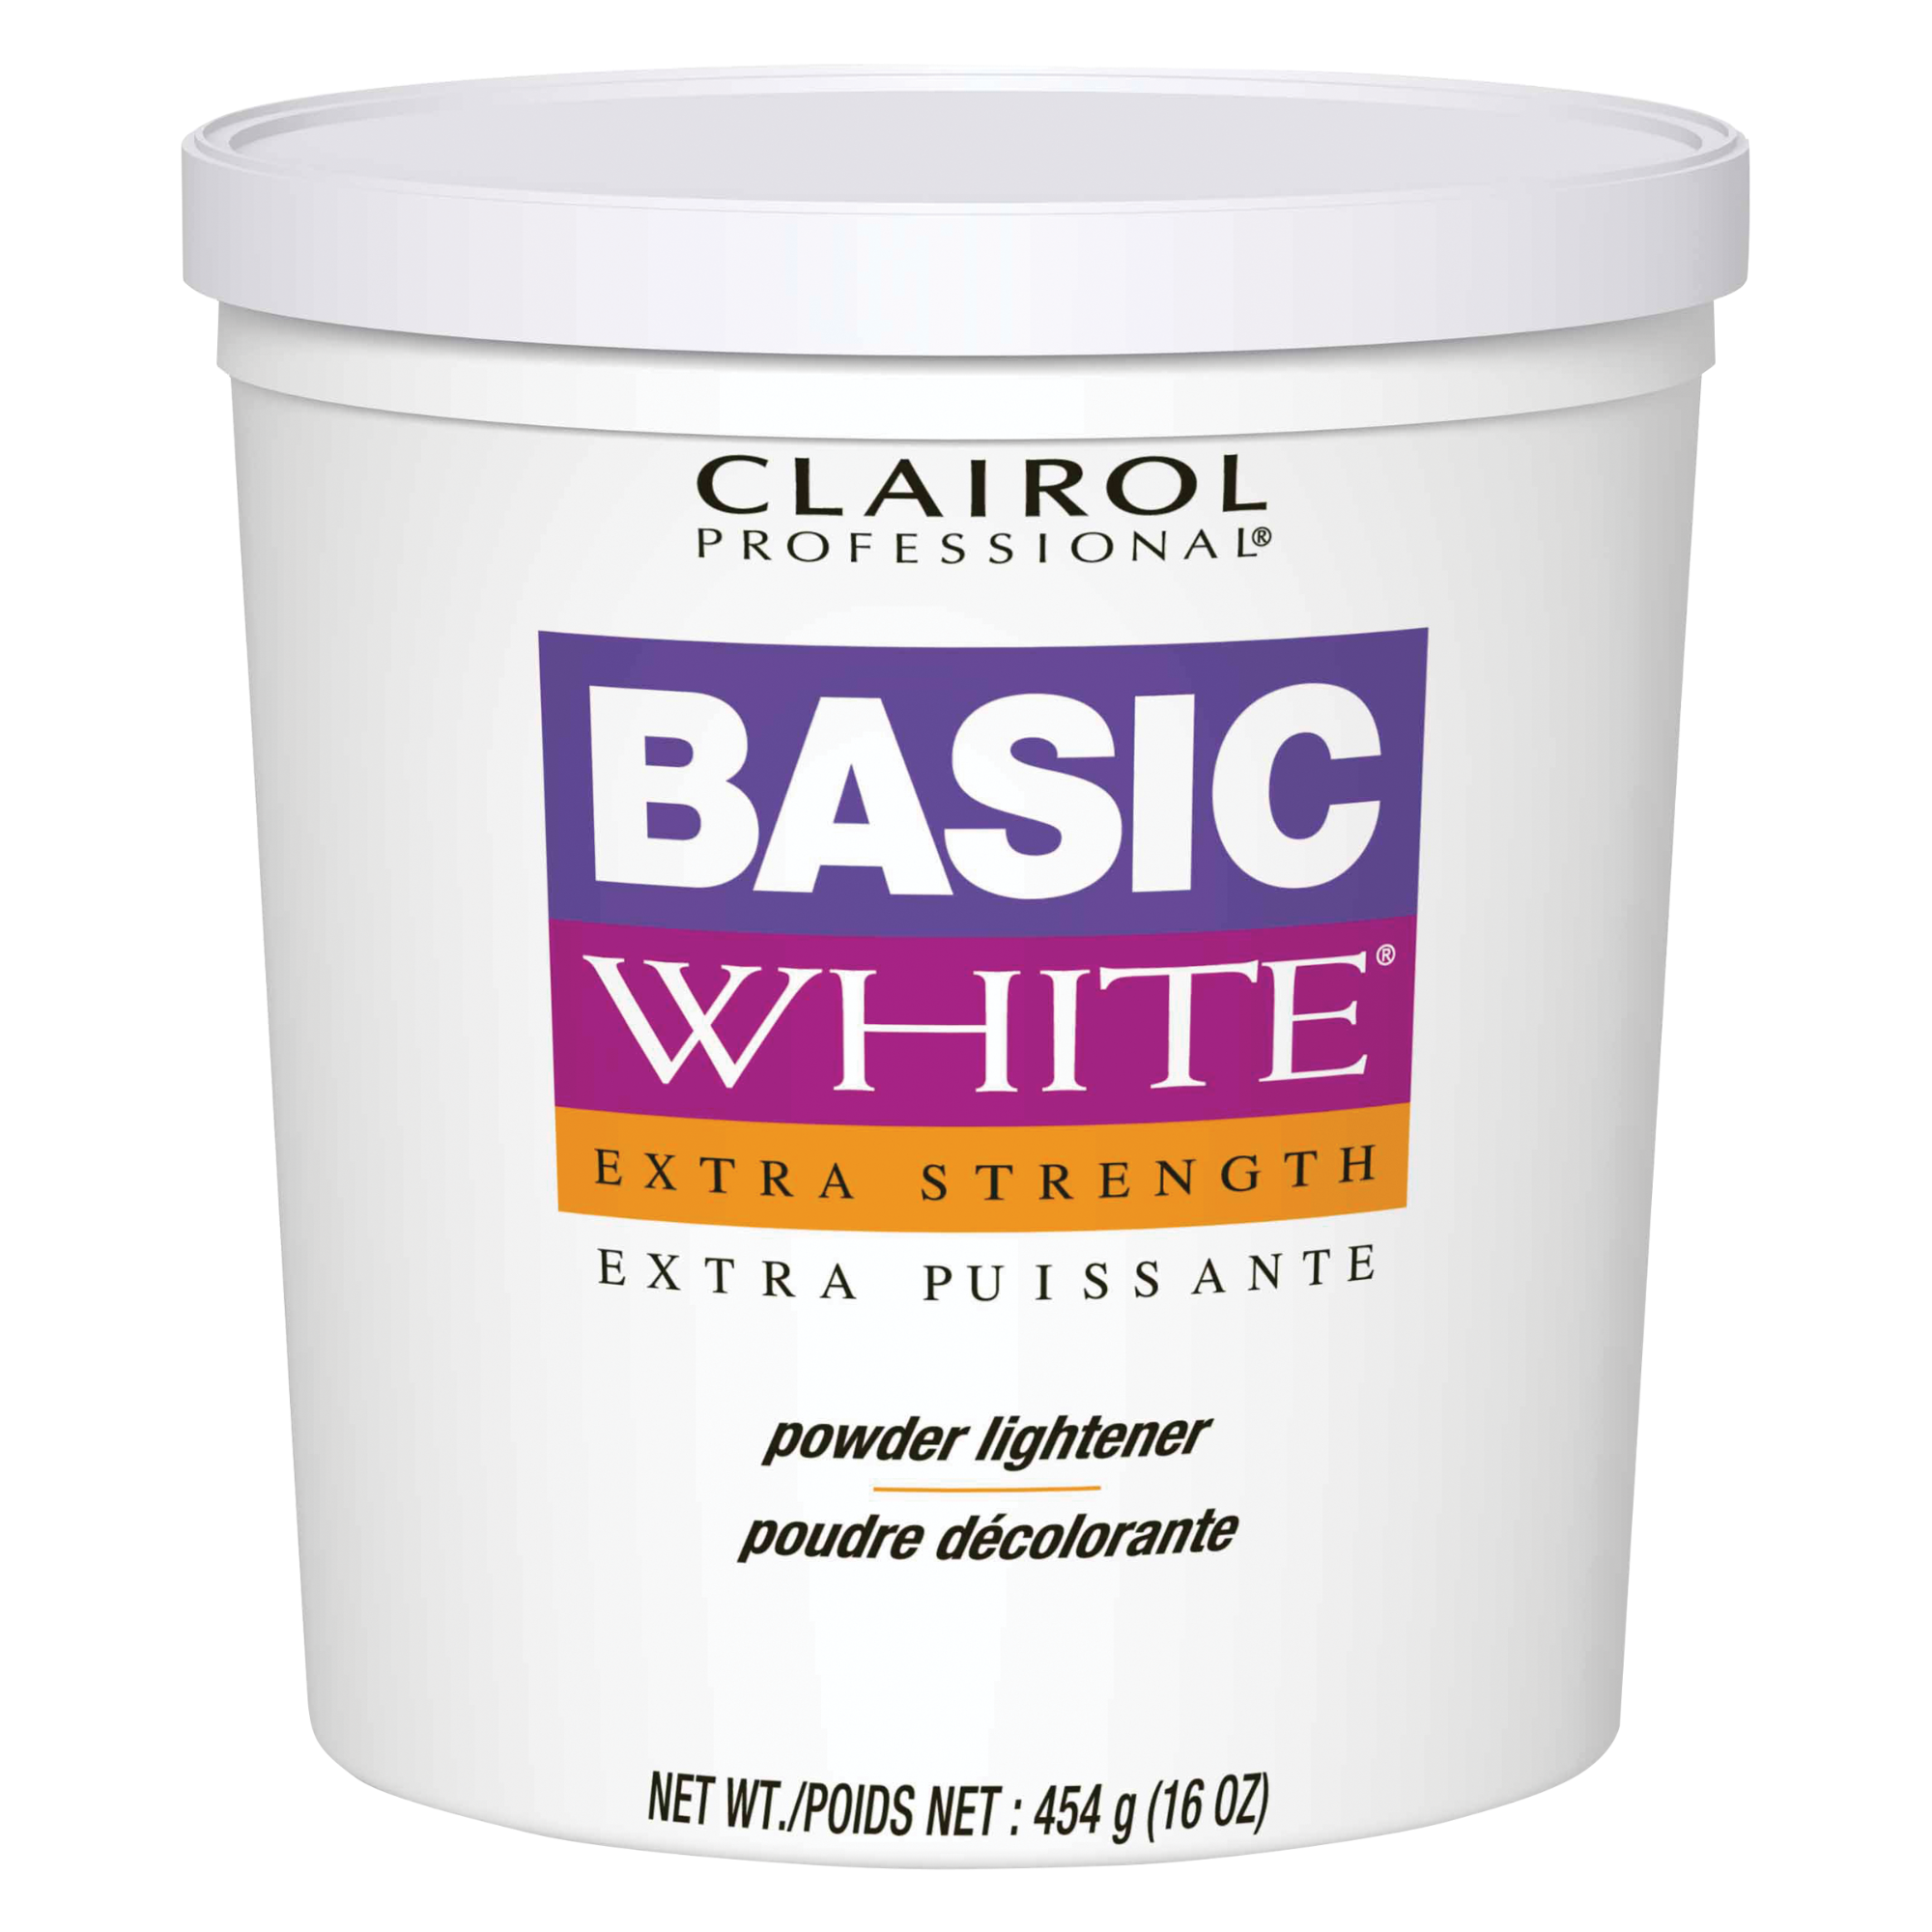 Basic White Powder Lightener - 16 oz.